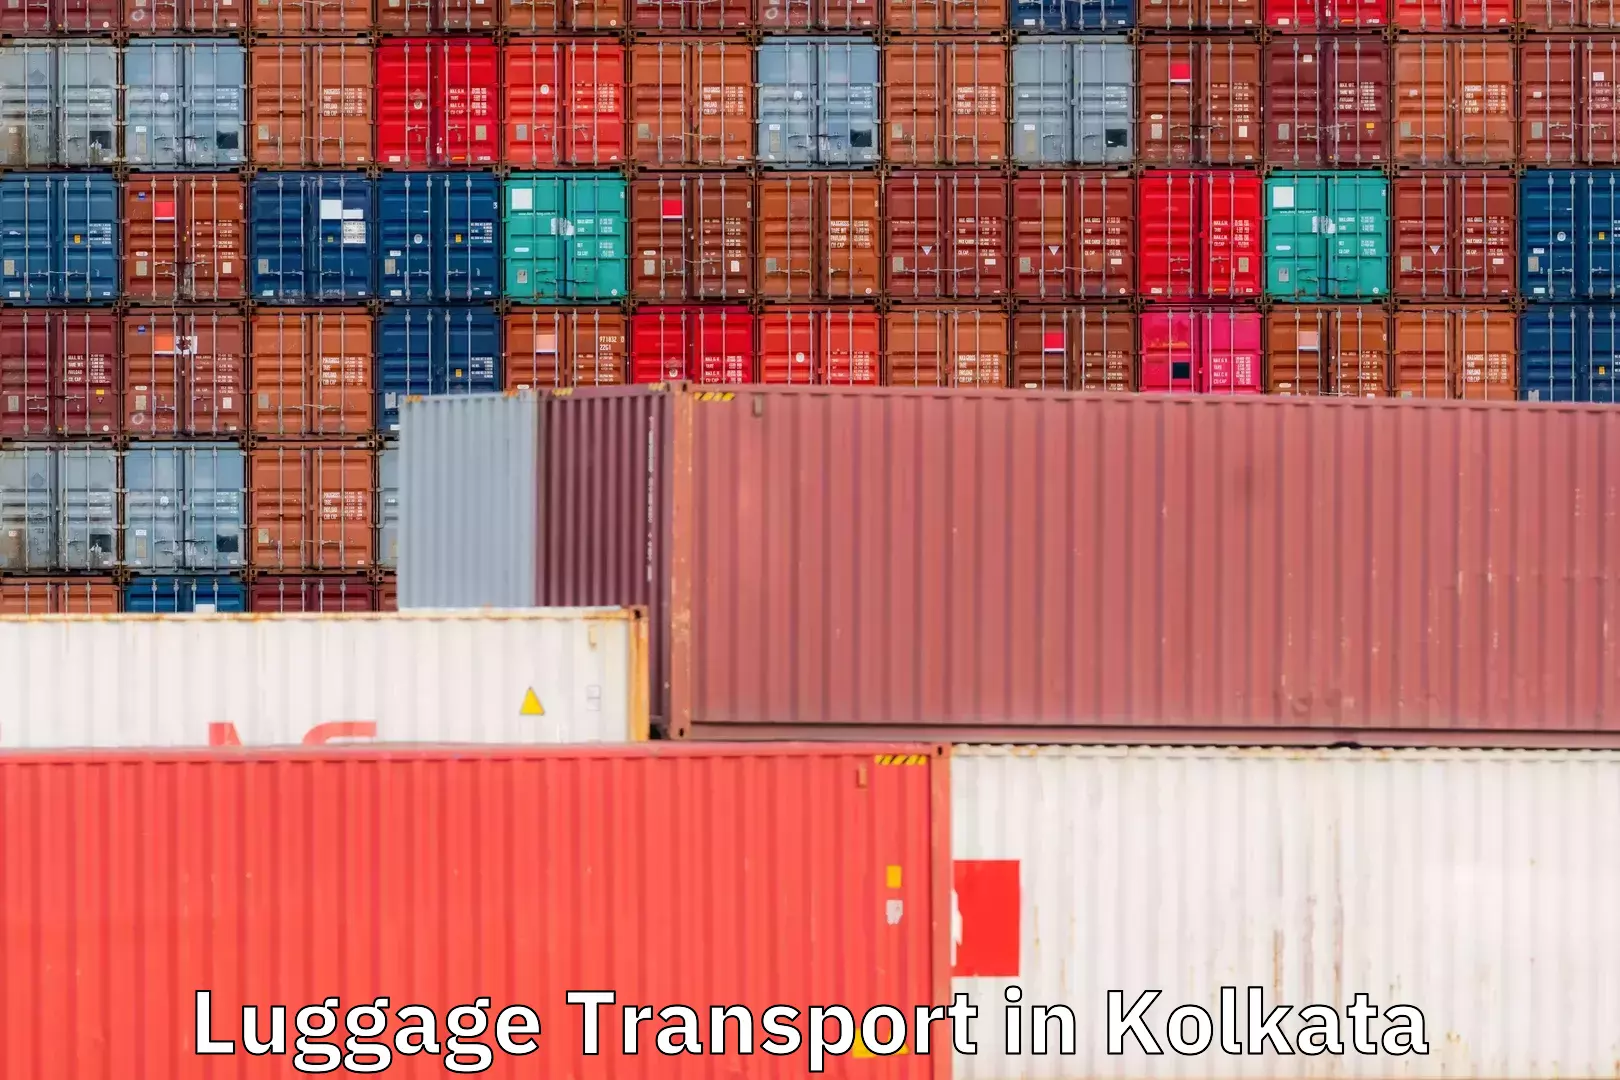 Automated luggage transport in Kolkata